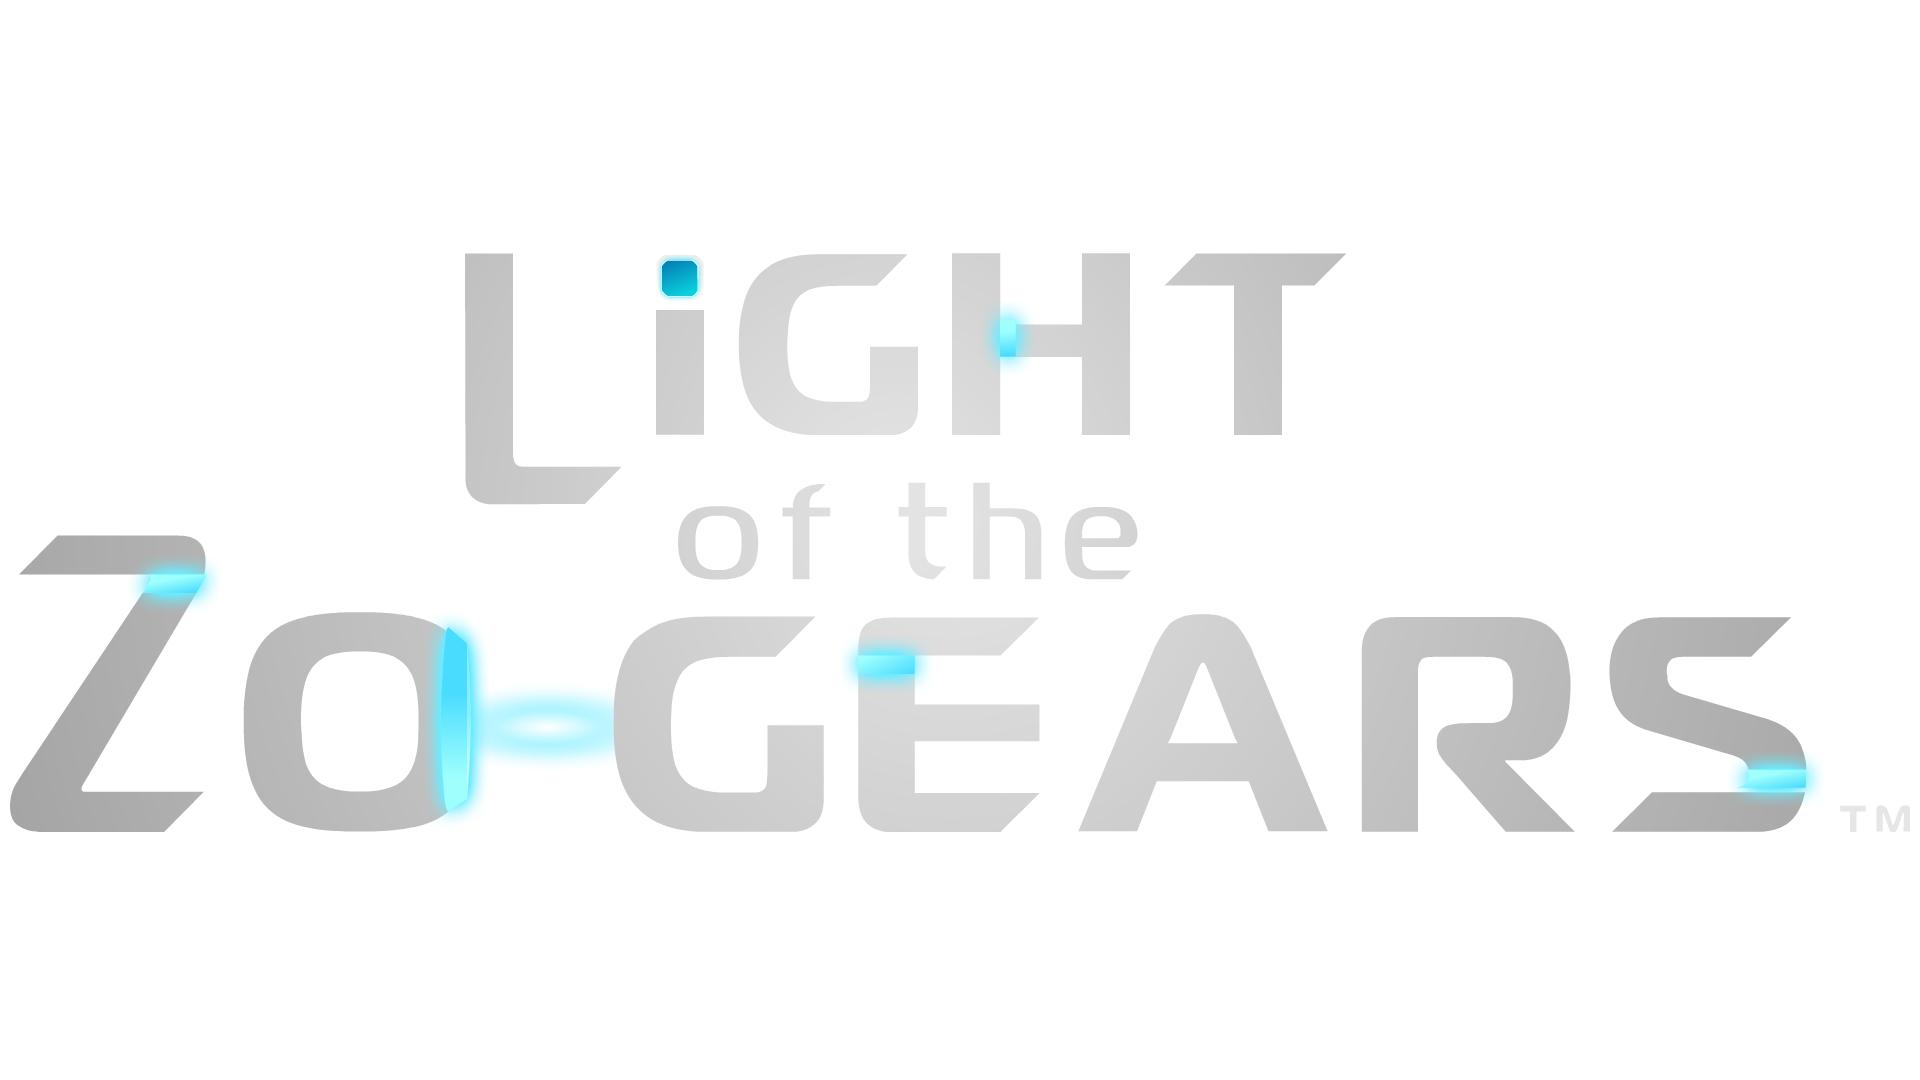 Light of the Zo-Gears